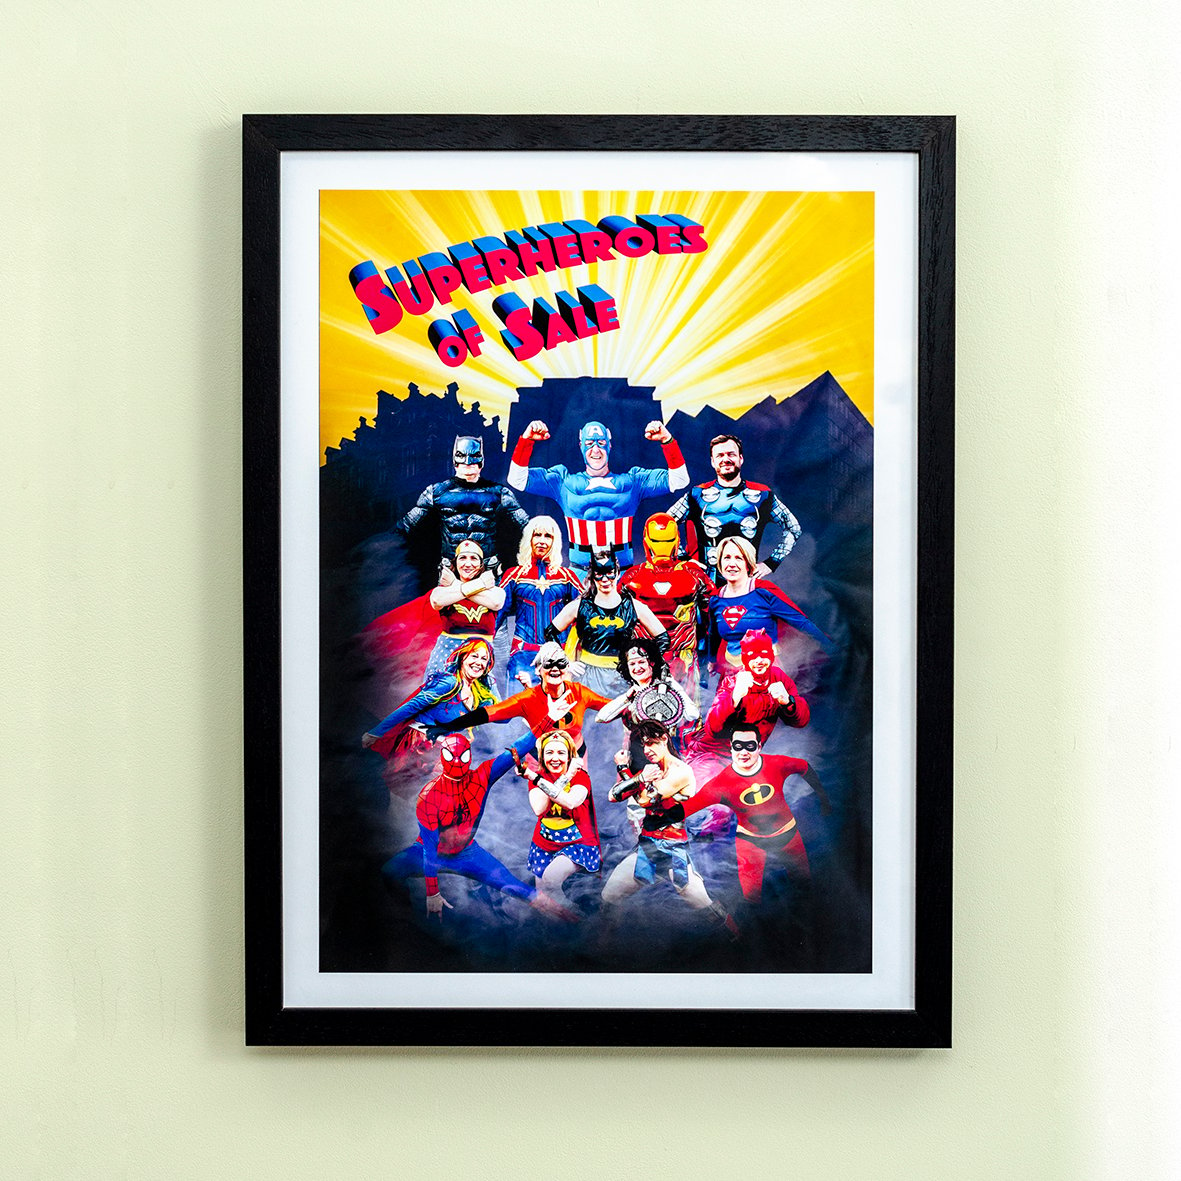 Image of Superheroes of Sale Framed Poster A3+